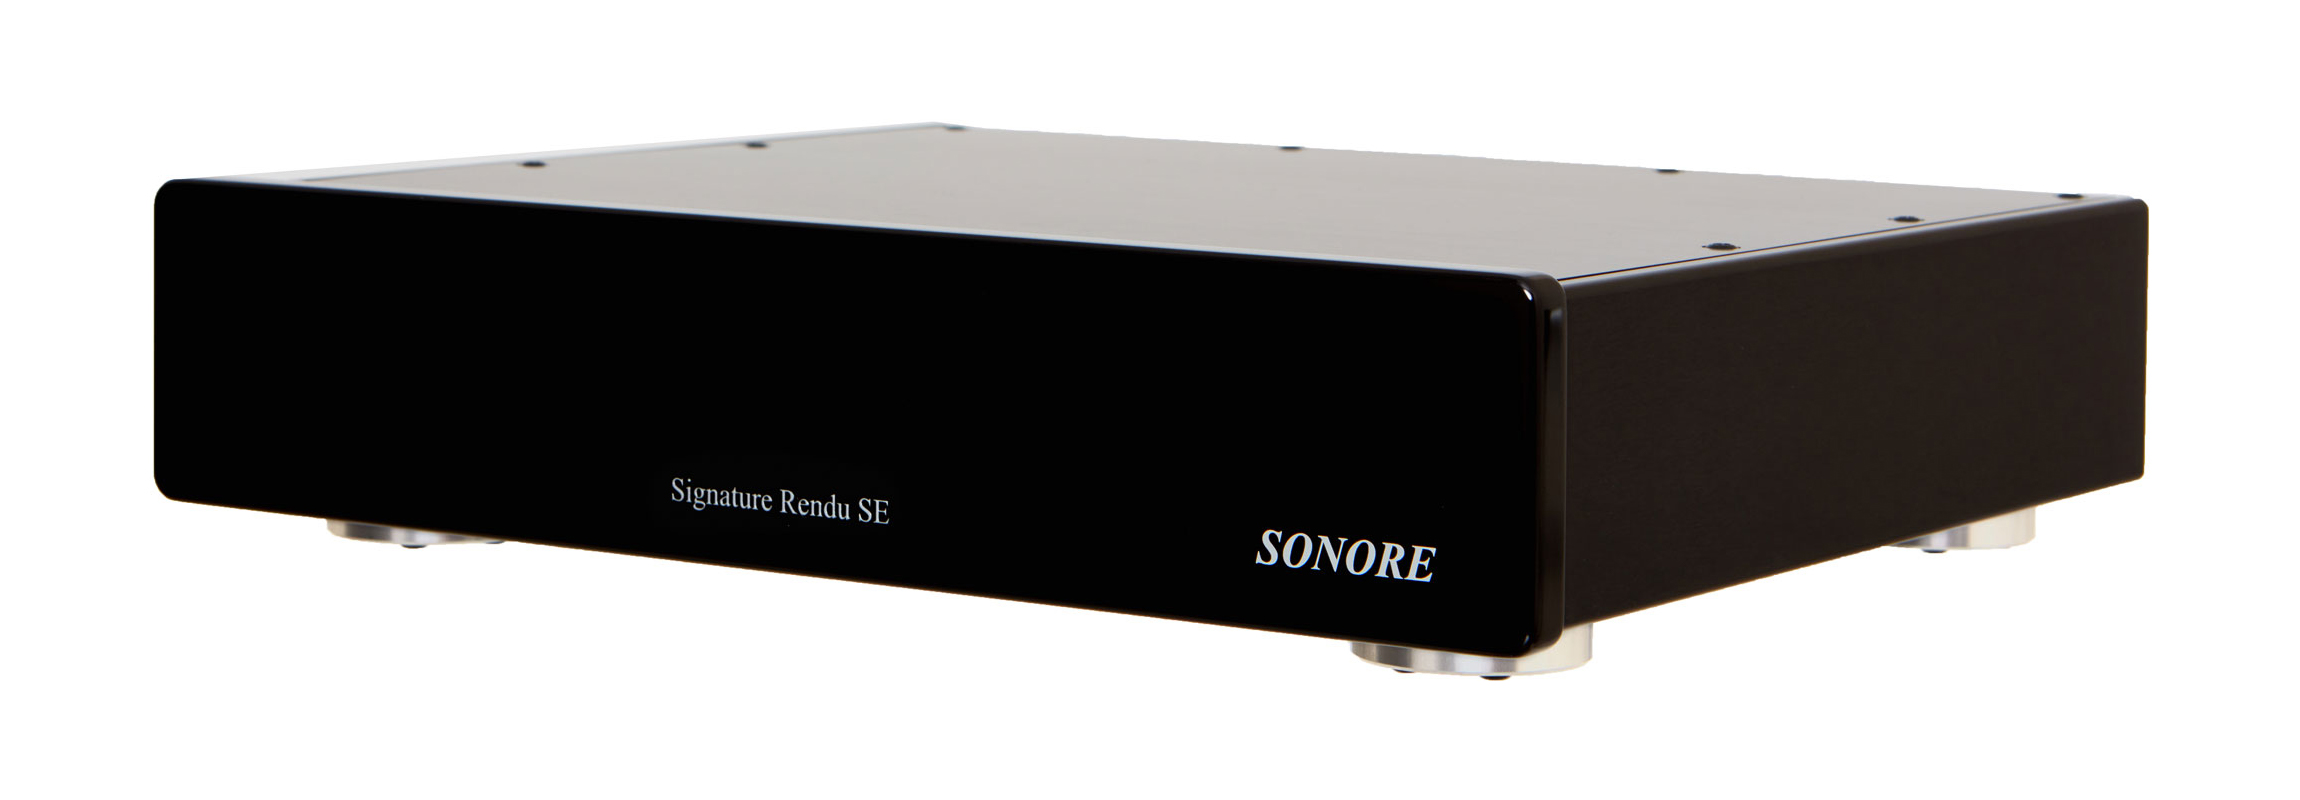 Sonore Signature Rendu SE optical streamer - Tier II SON-SIGRENDU-II